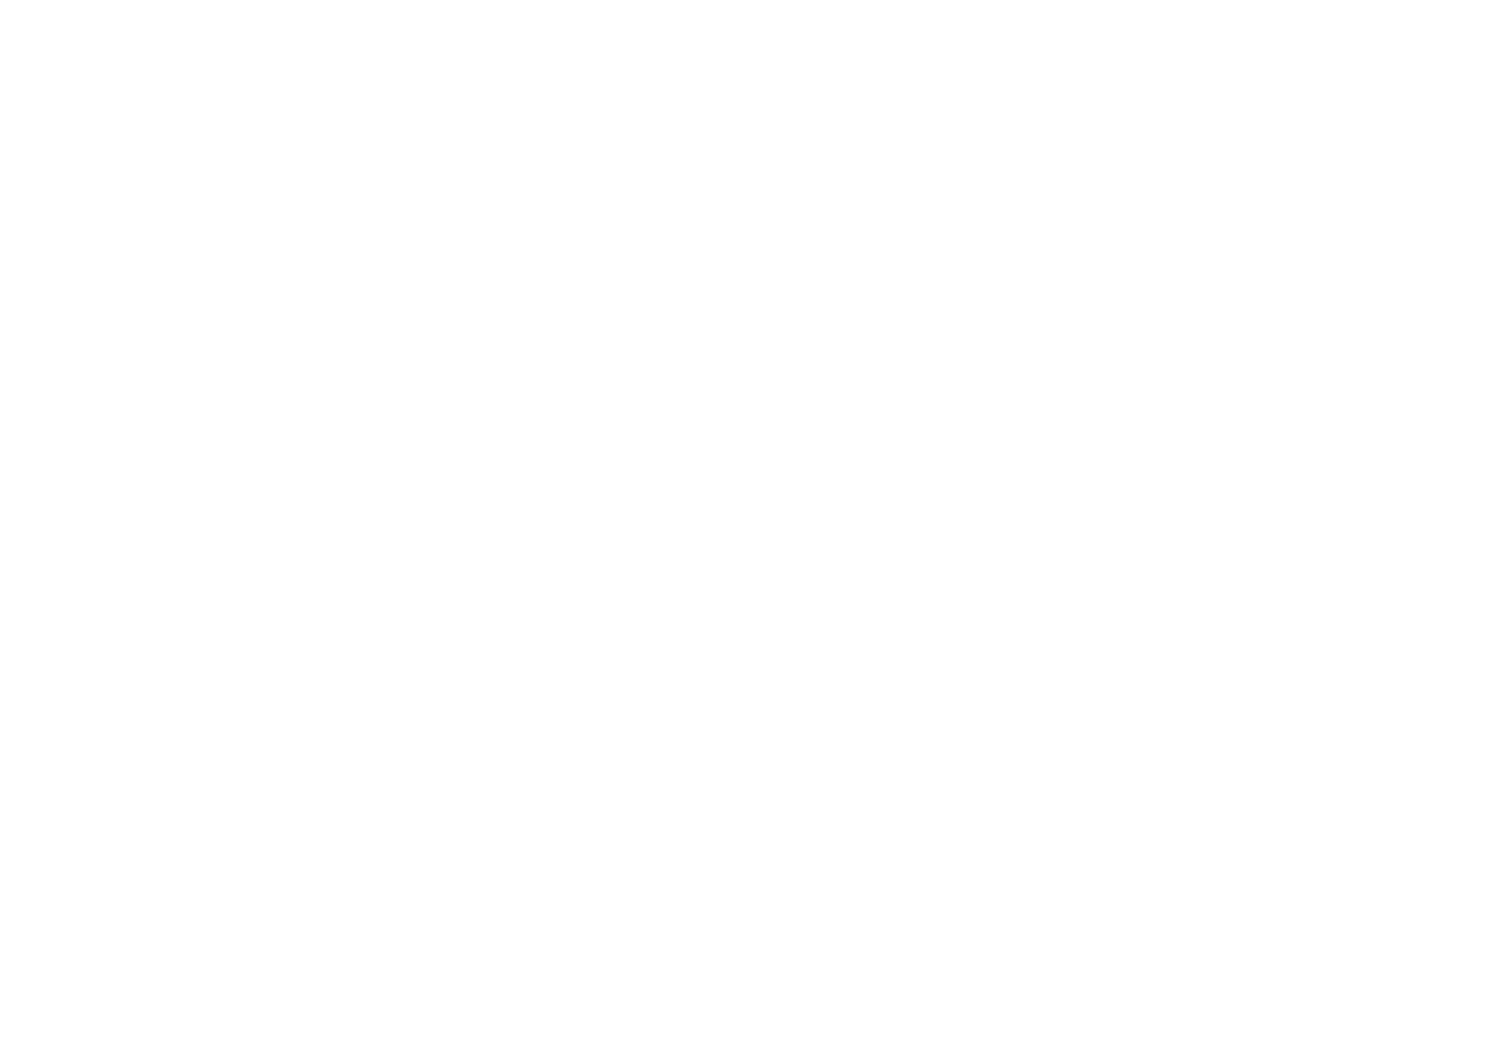 The Social Mobility Pledge